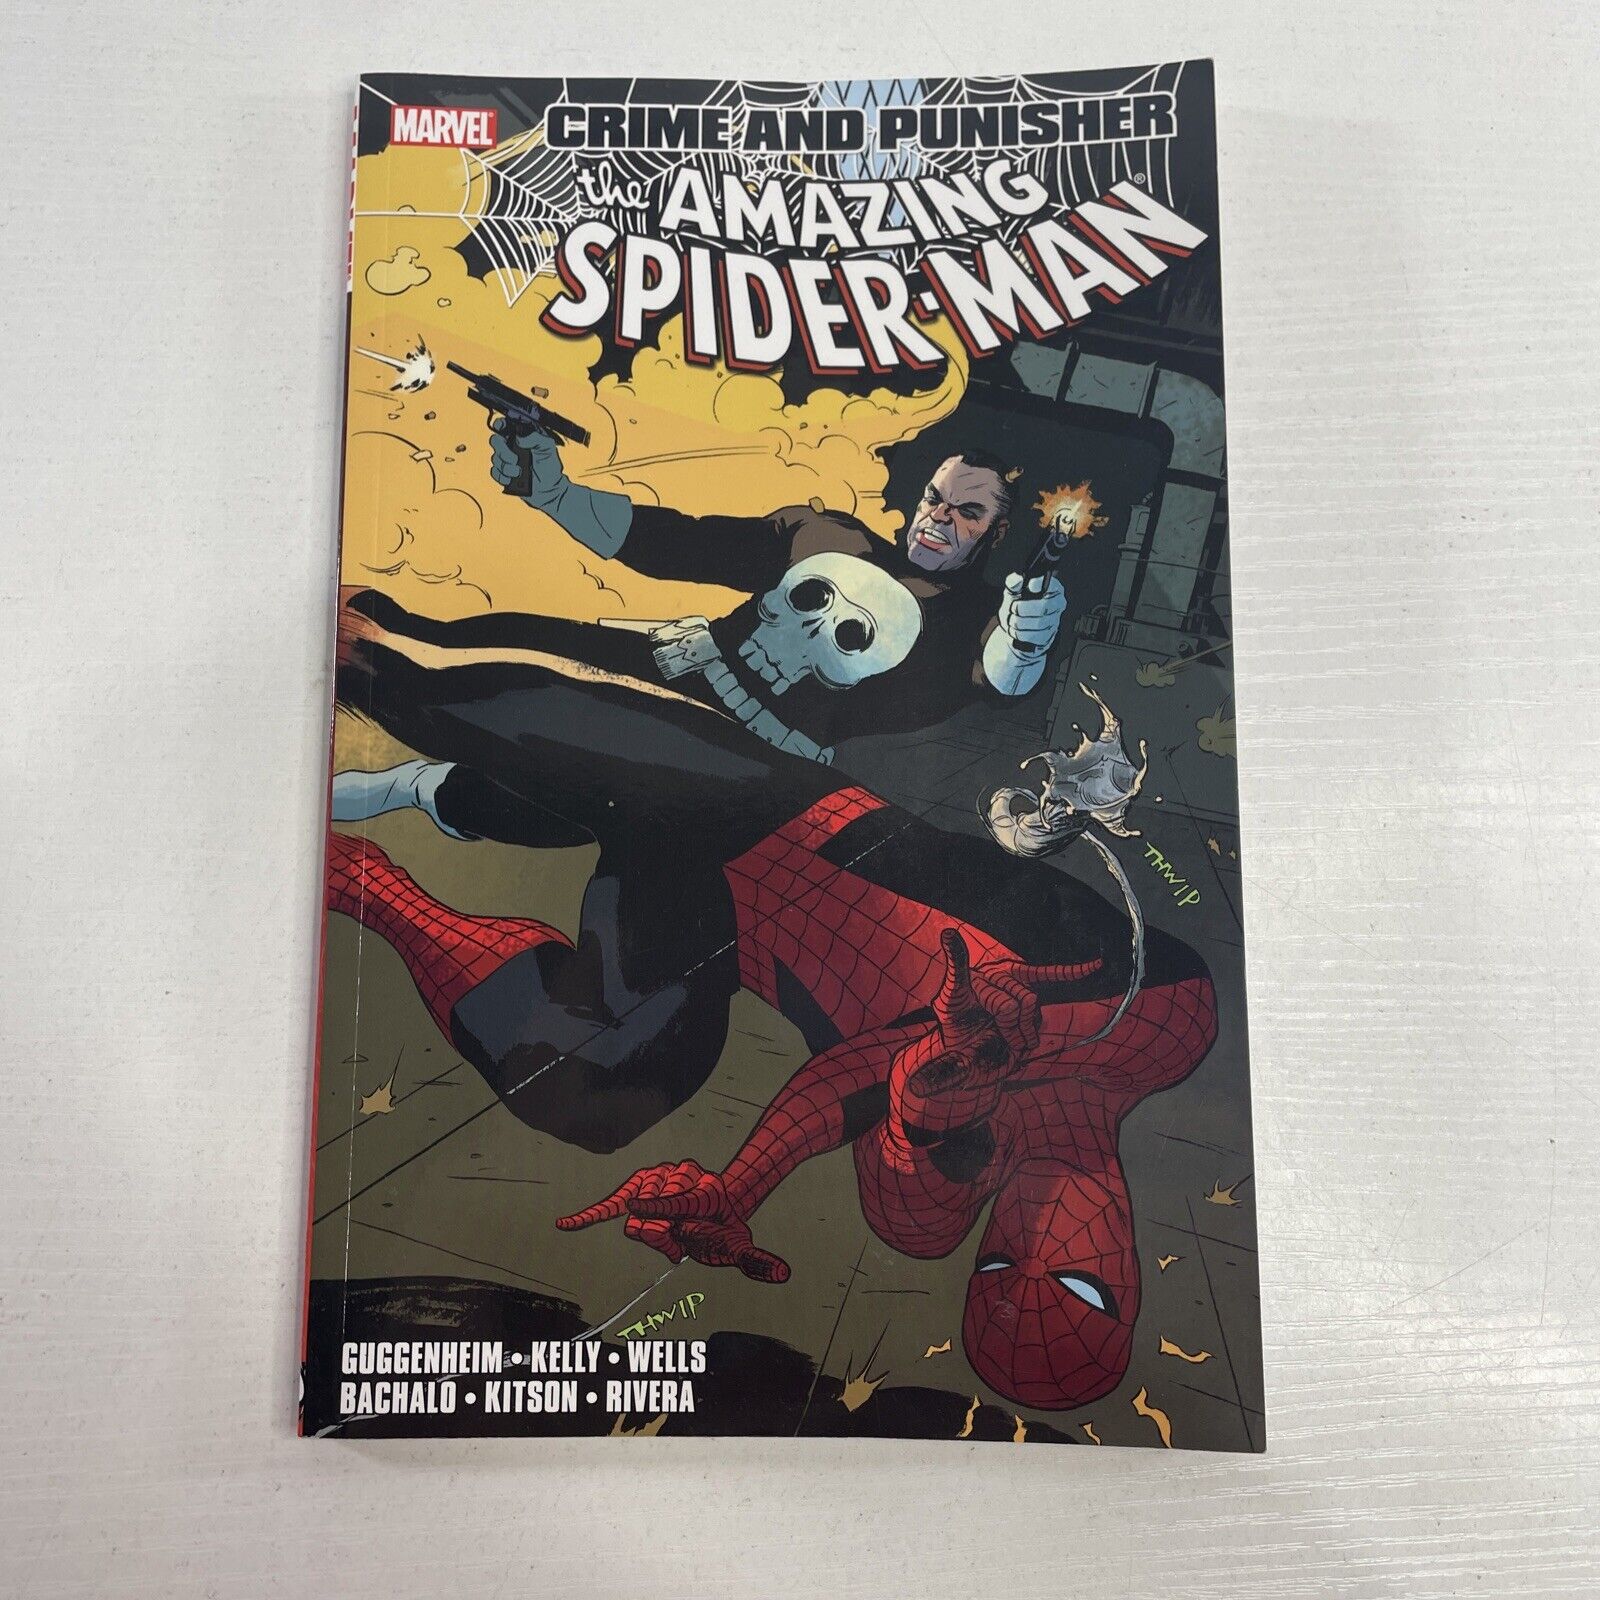 Amazing Spider-Man Crime And Punisher Marvel Comics Trade Paperback - 2009